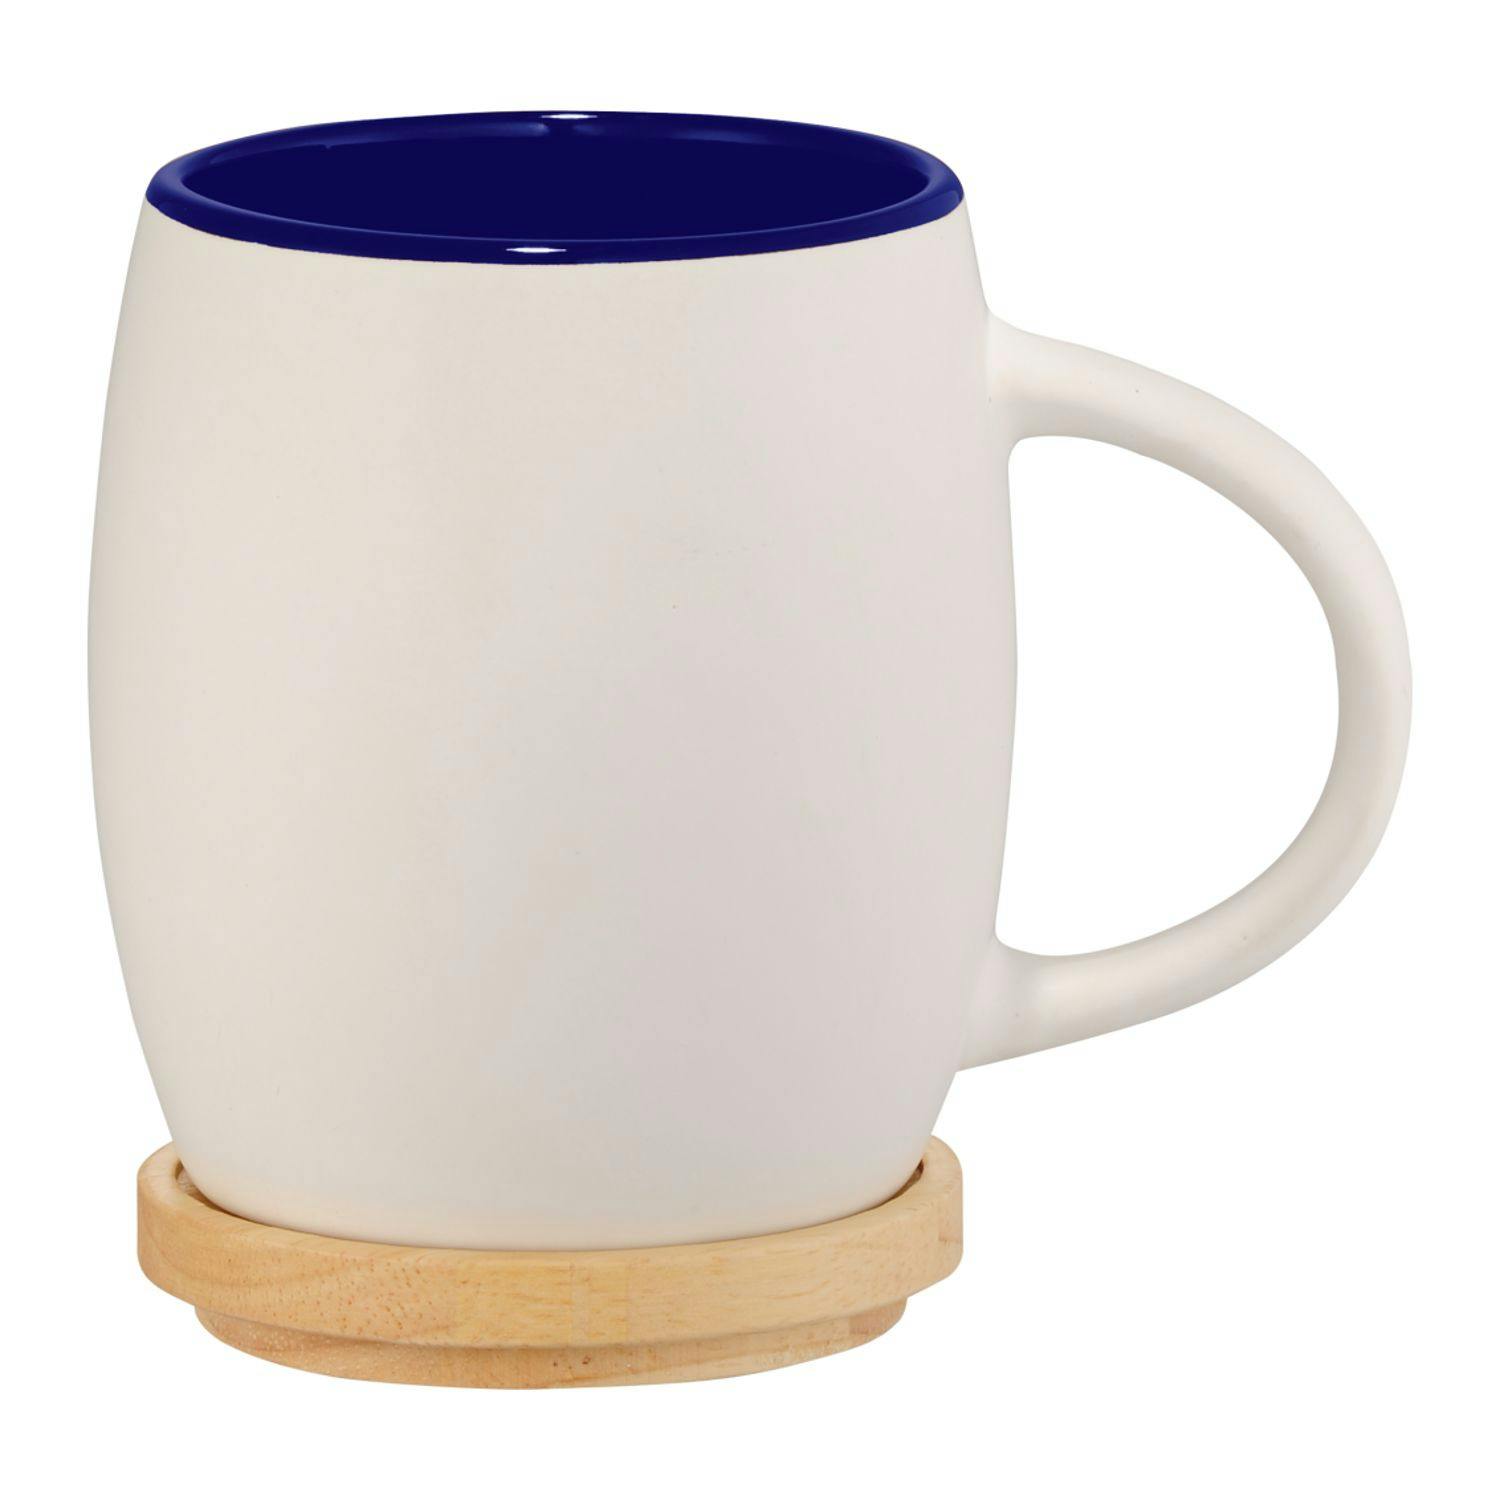 Hearth Ceramic Mug with Wood Lid/Coaster 15oz - additional Image 2